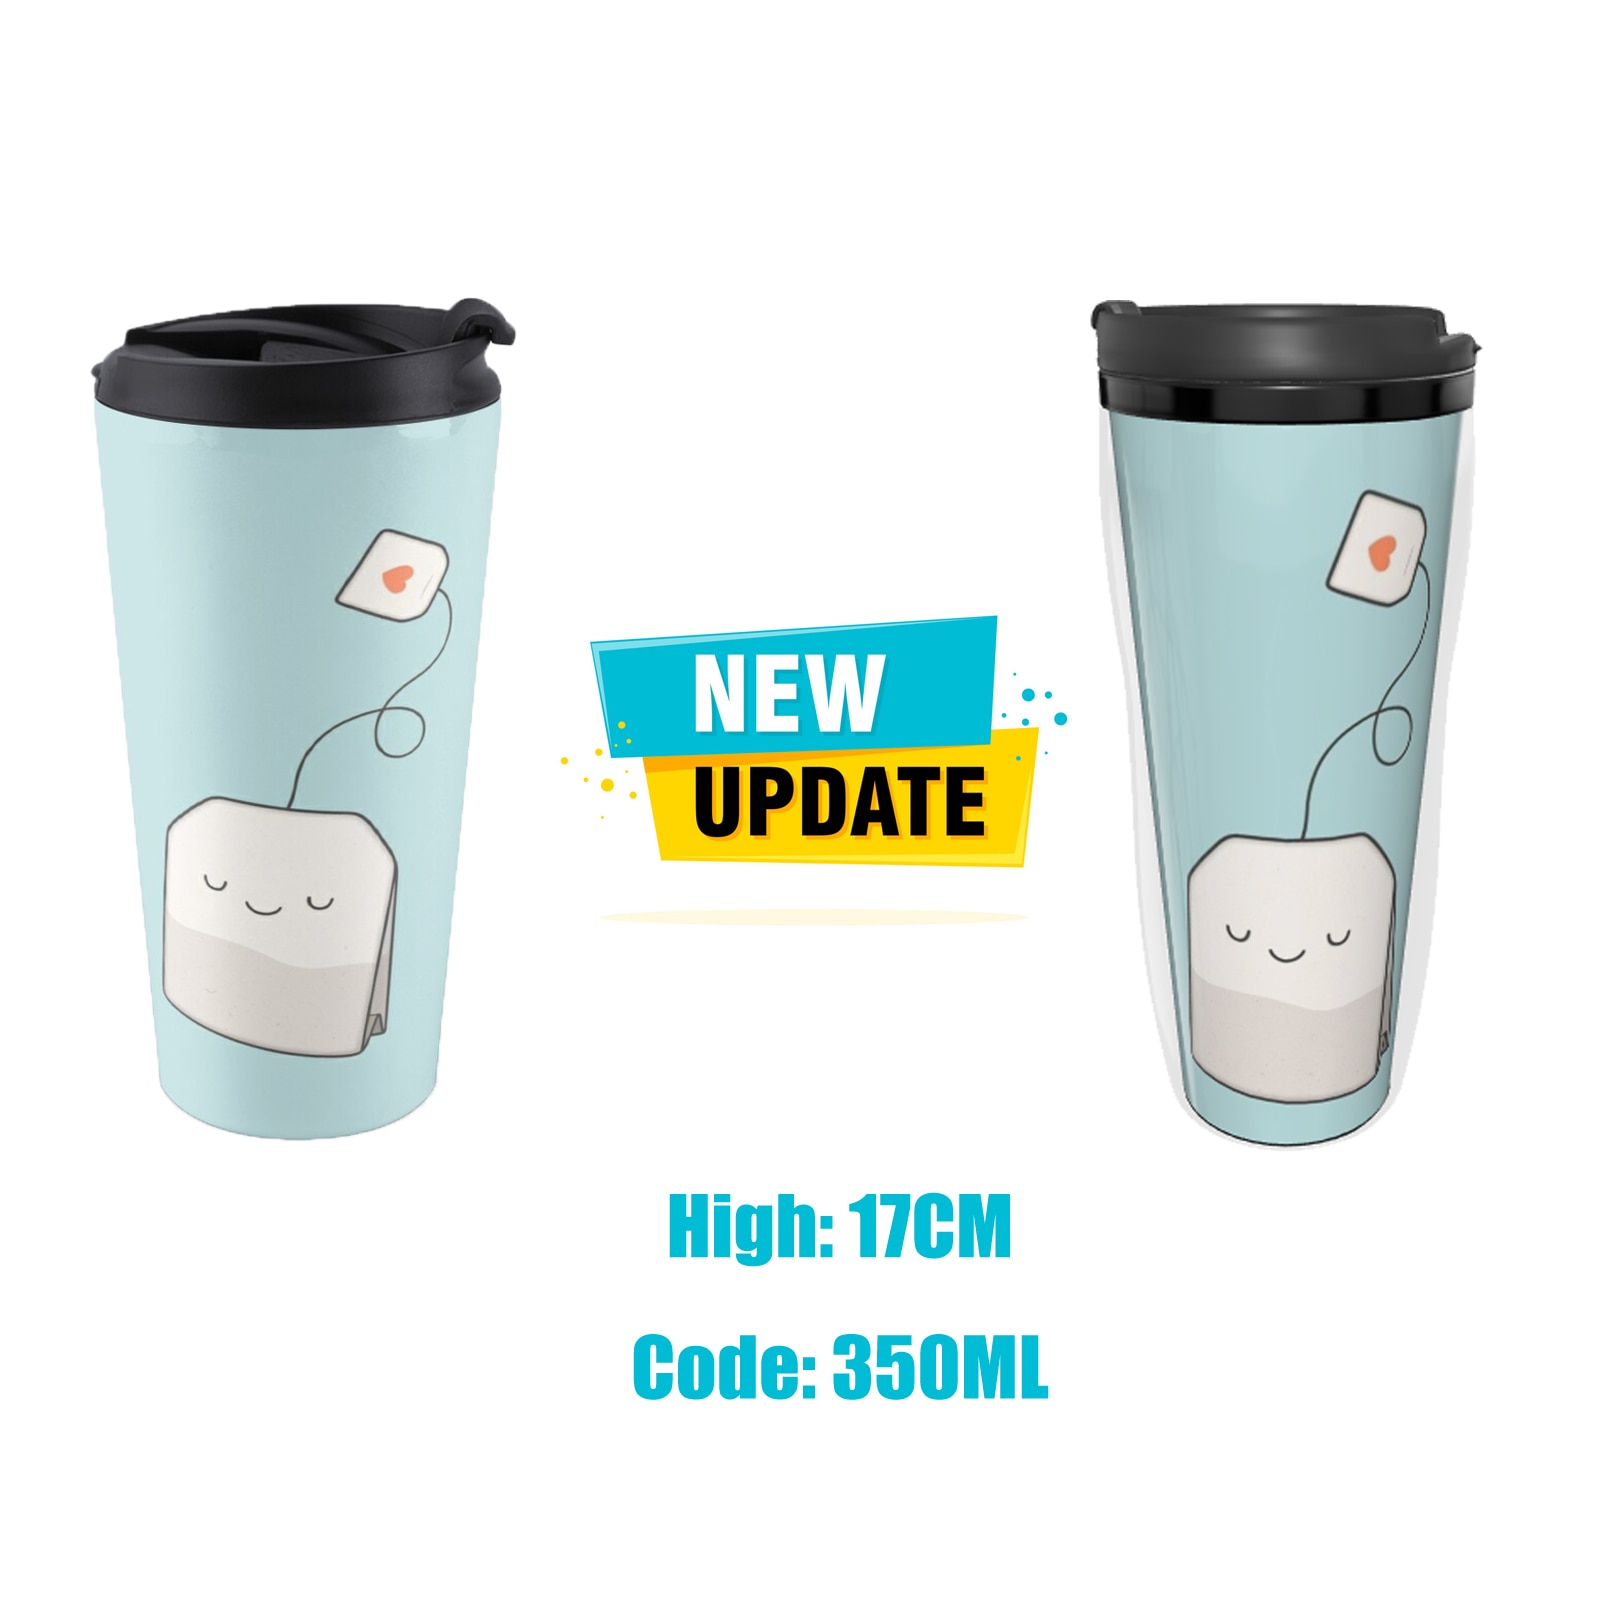 You Just Got Litt Up! Travel Coffee Mug Arab Coffee Cups